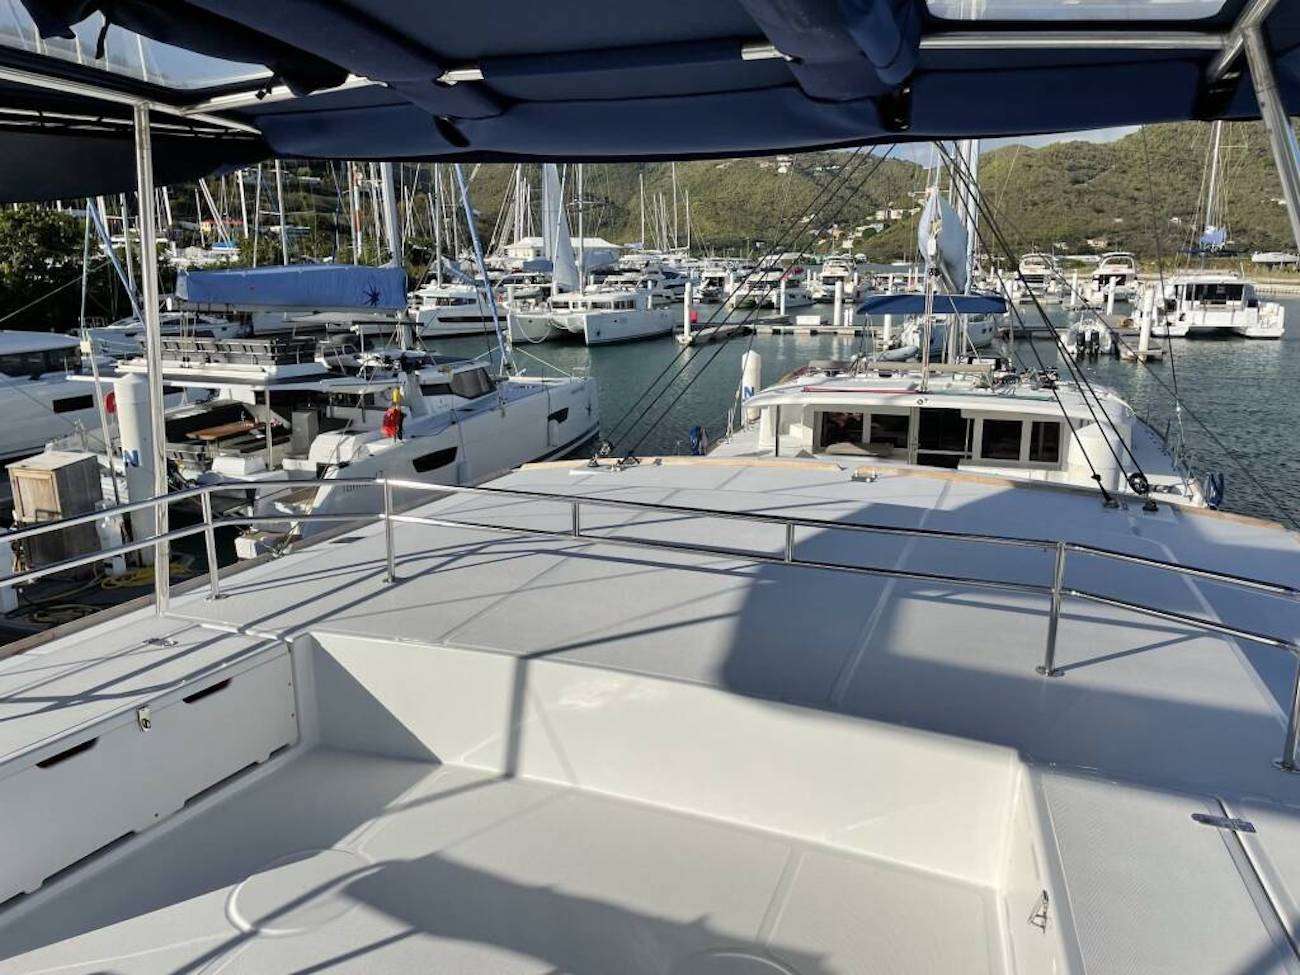 NO INHERITANCE - Luxury yacht charter British Virgin Islands & Boat hire in Caribbean 4